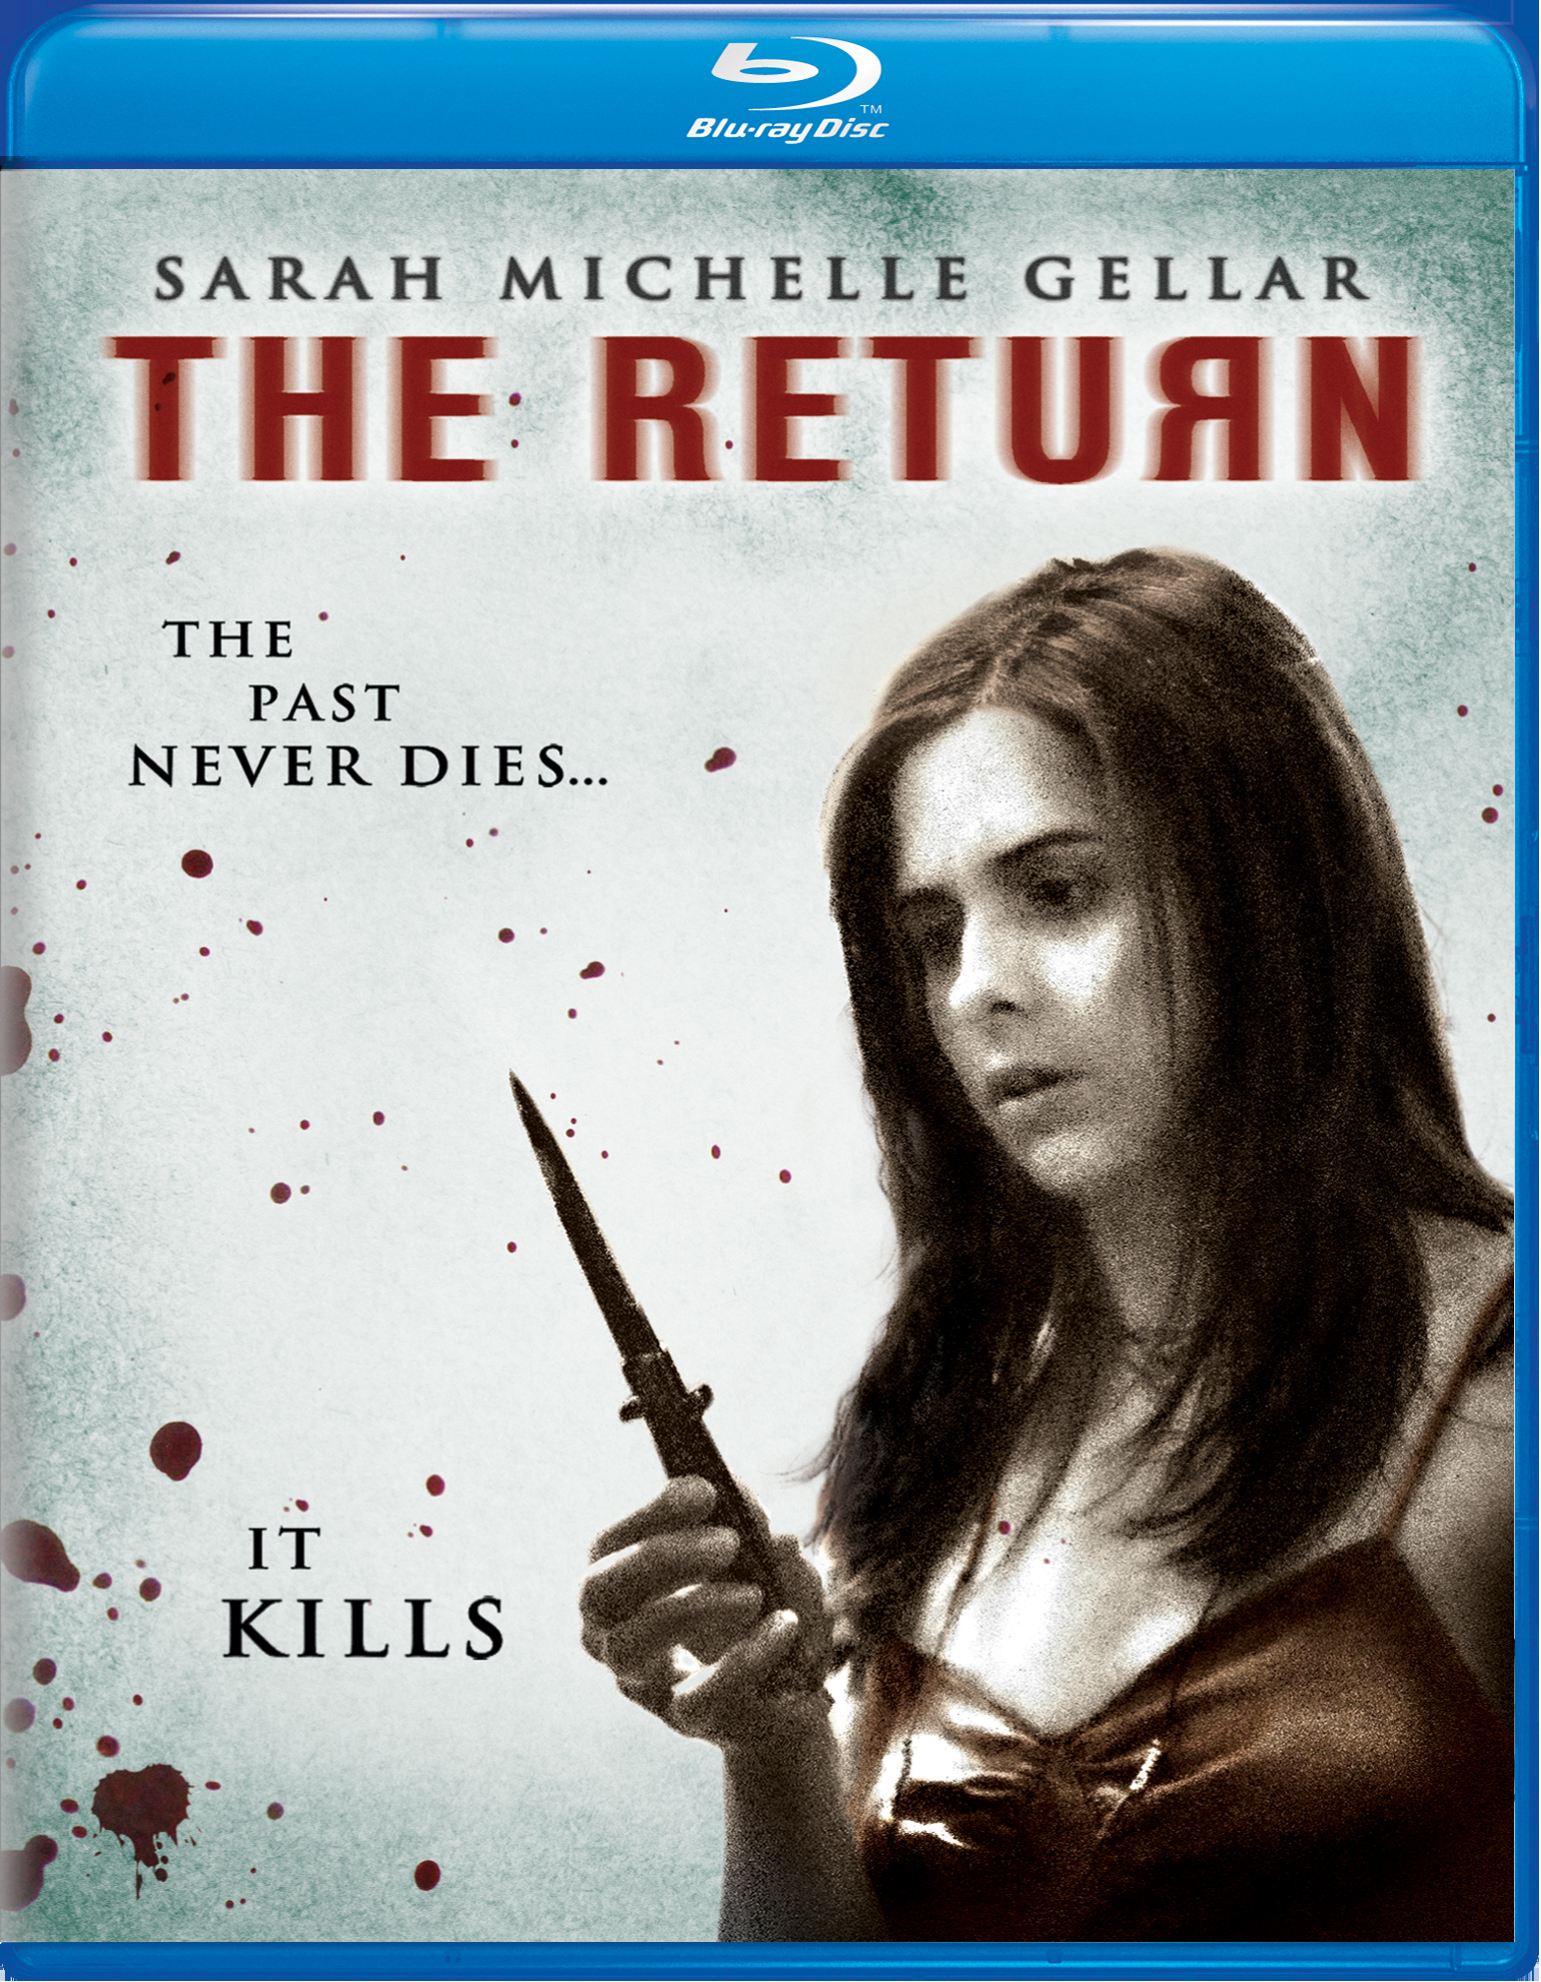 The Return - Blu-ray [ 2006 ]  - Thriller Movies On Blu-ray - Movies On GRUV